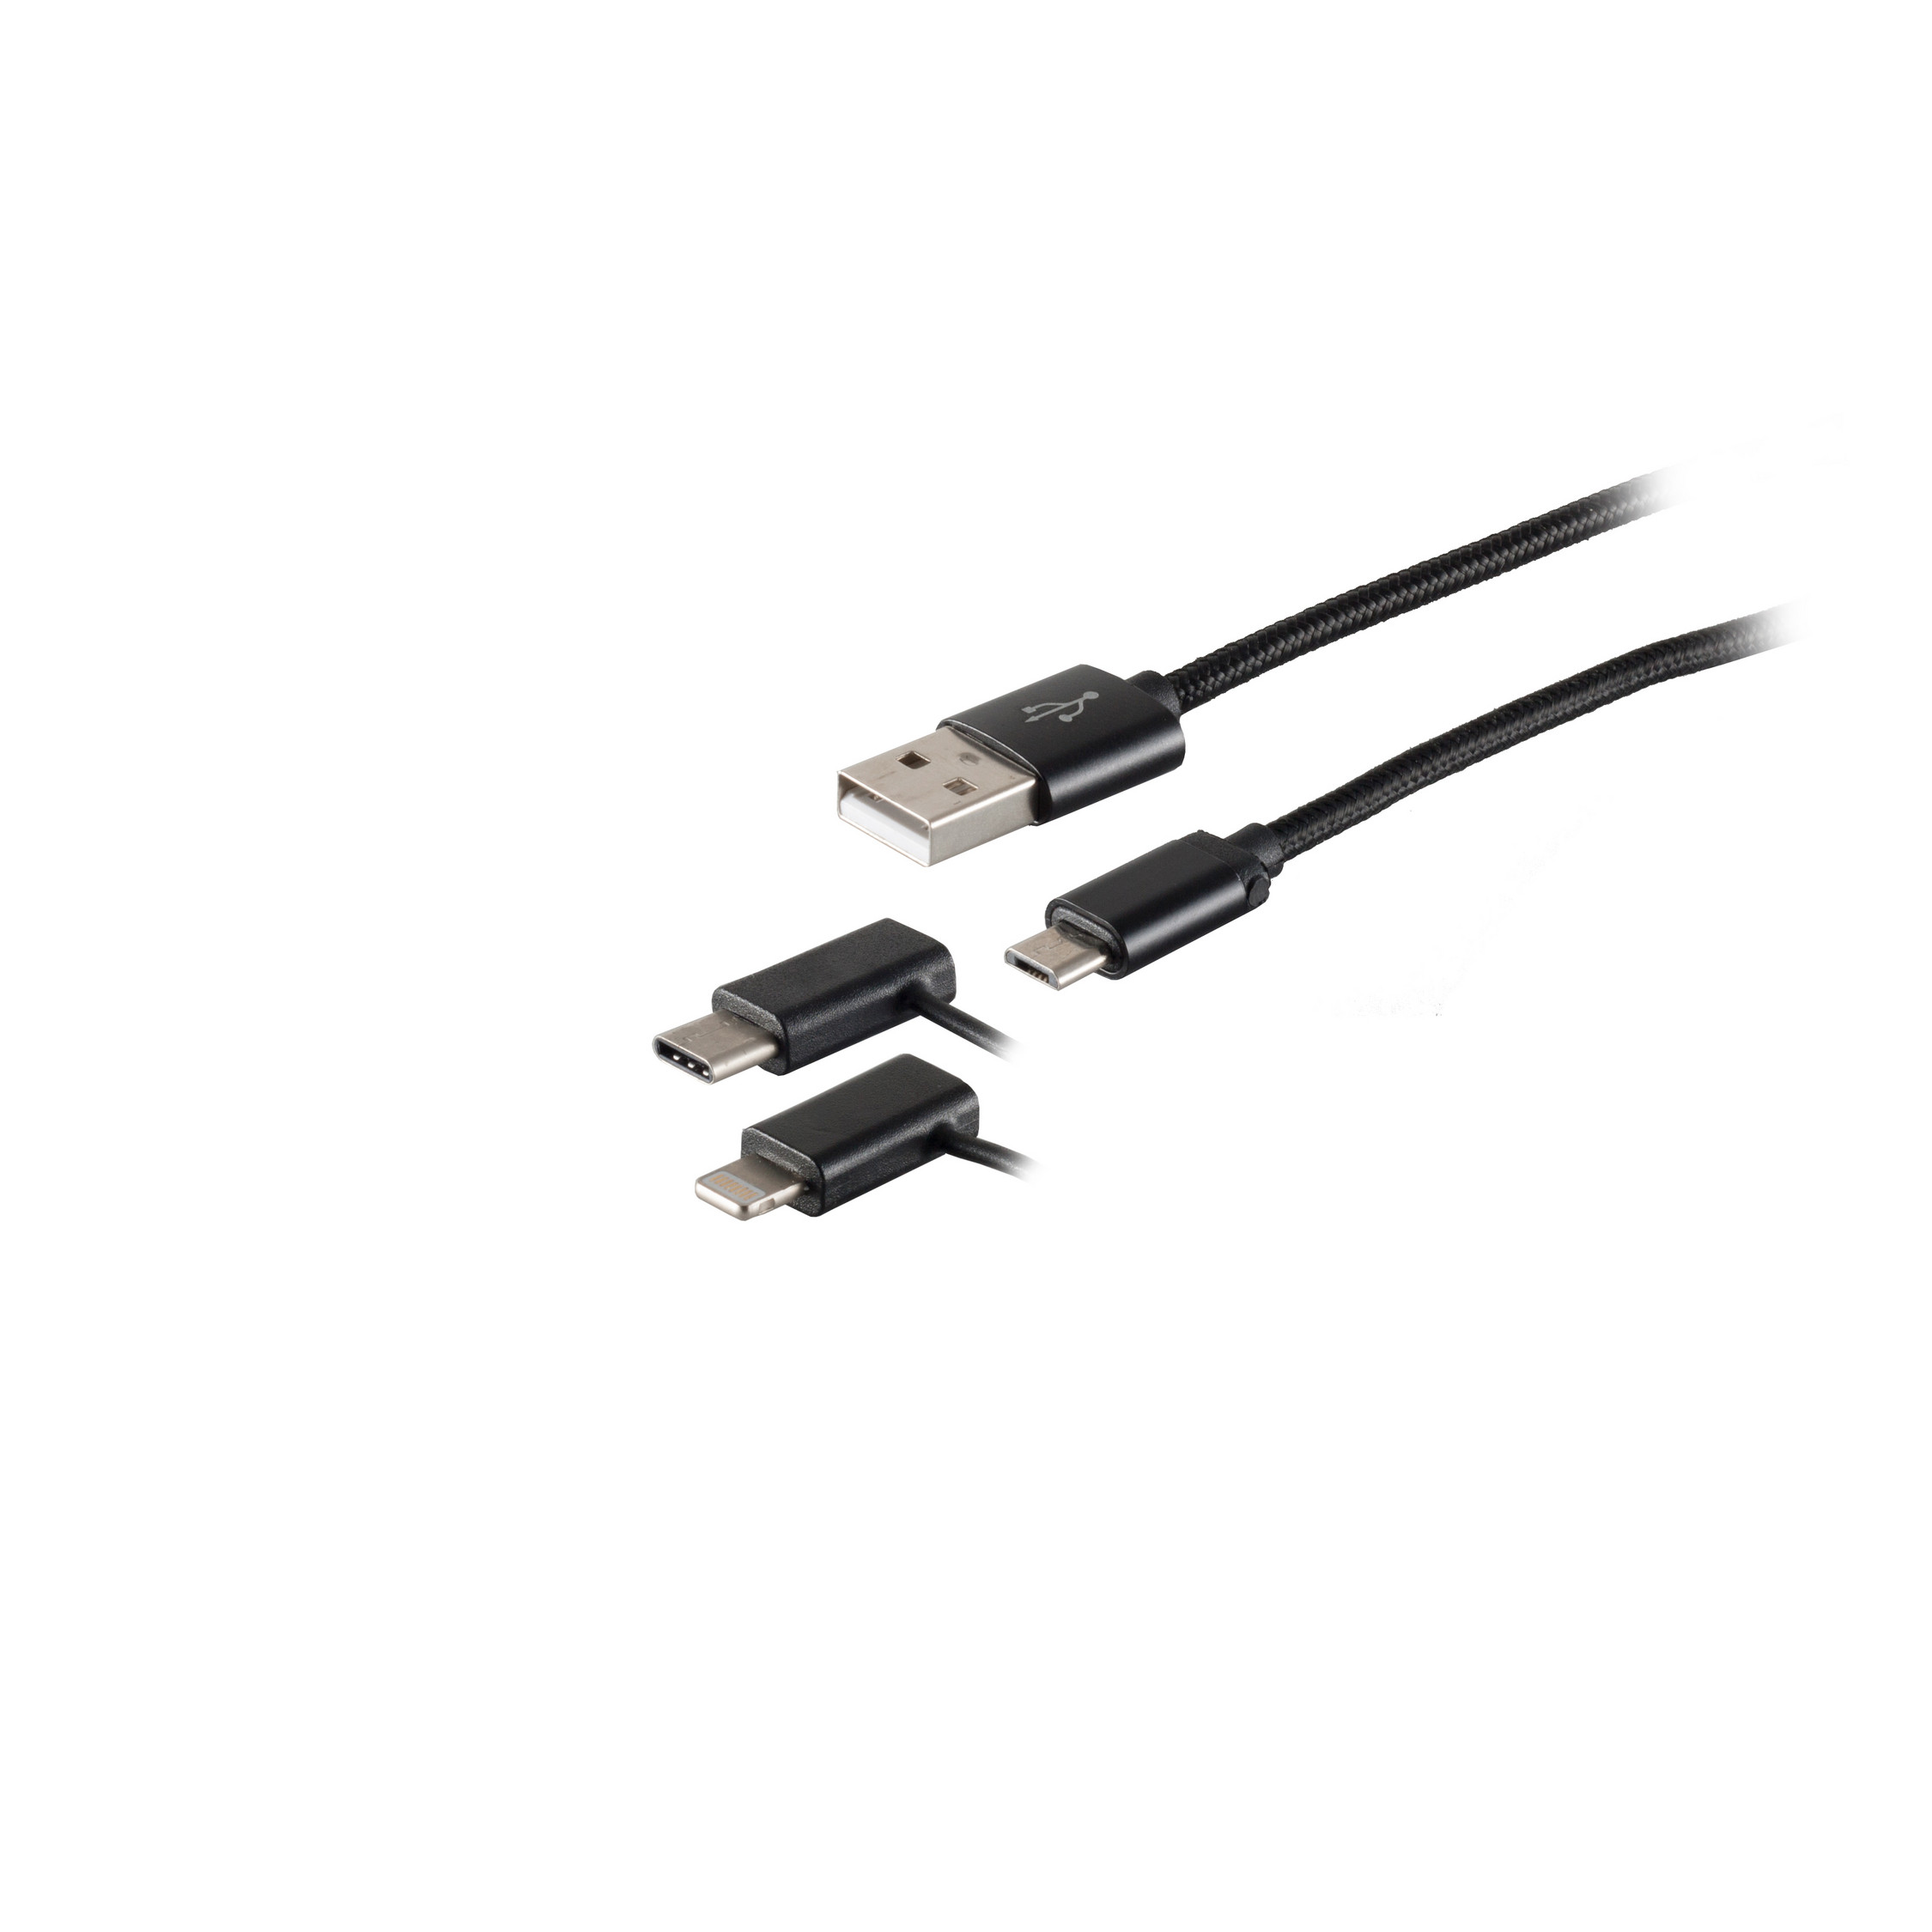 1m 3in1 MAXIMUM Ladekabel 8-pin MicroB/ Kabel CONNECTIVITY USB S/CONN C/ Typ Stecker